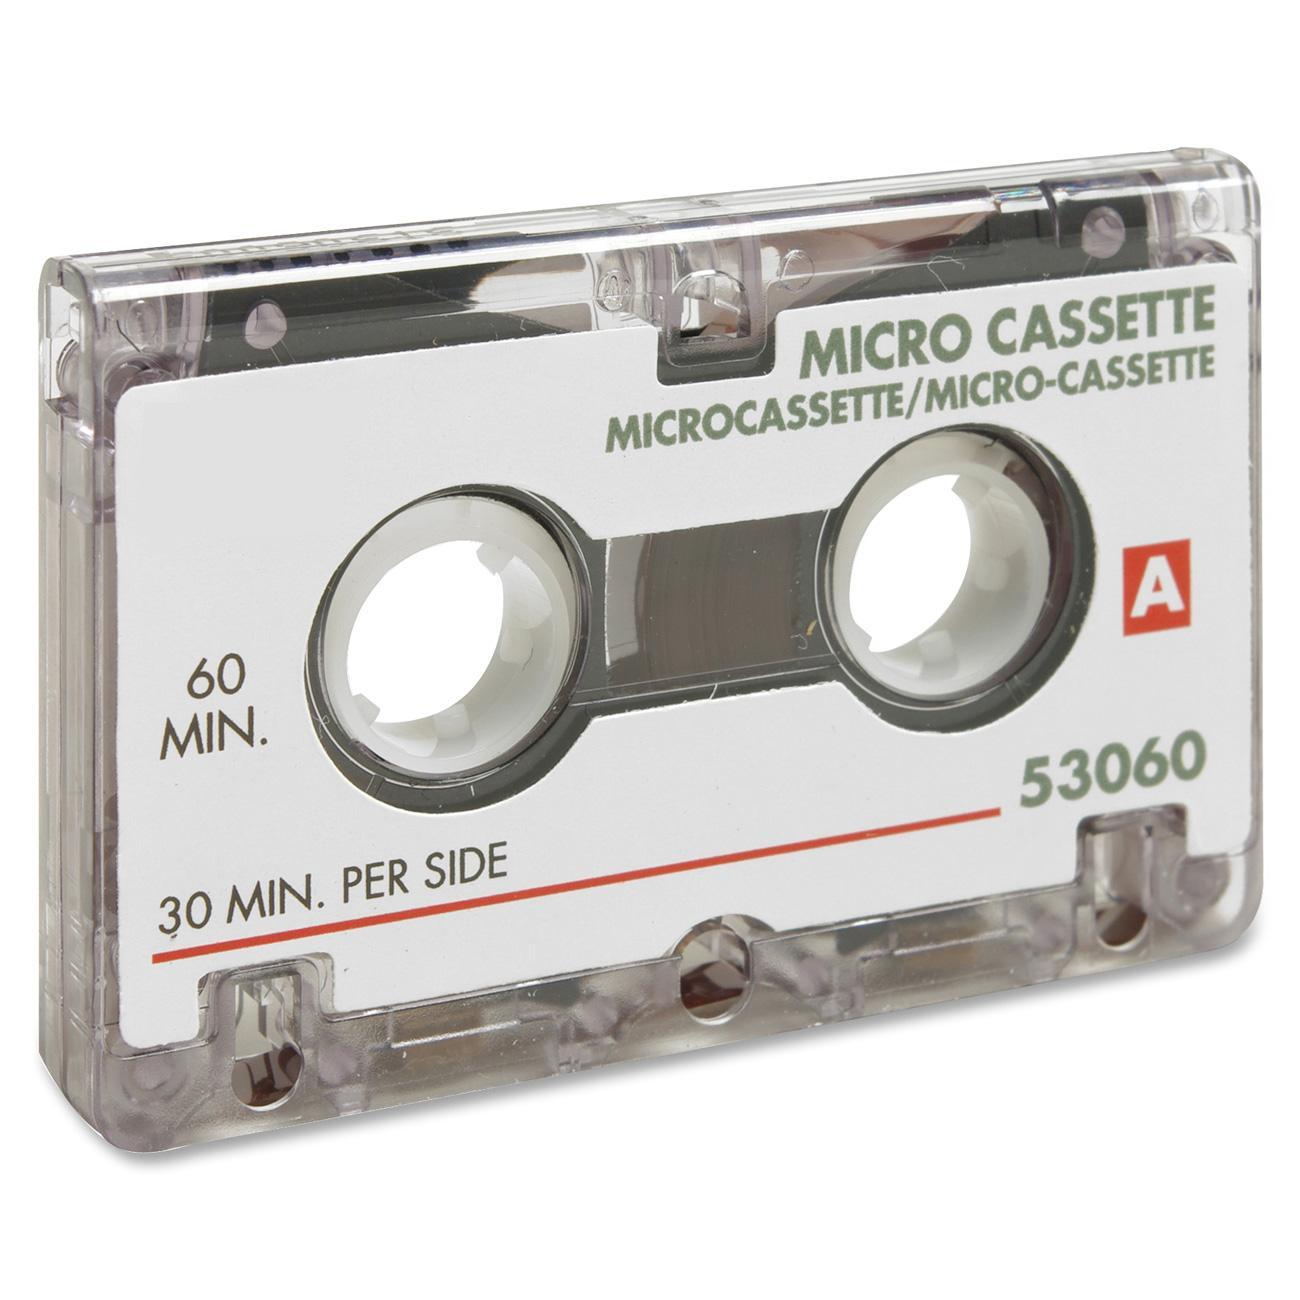 Transfer Micro Cassette  Convert to USB as digital files